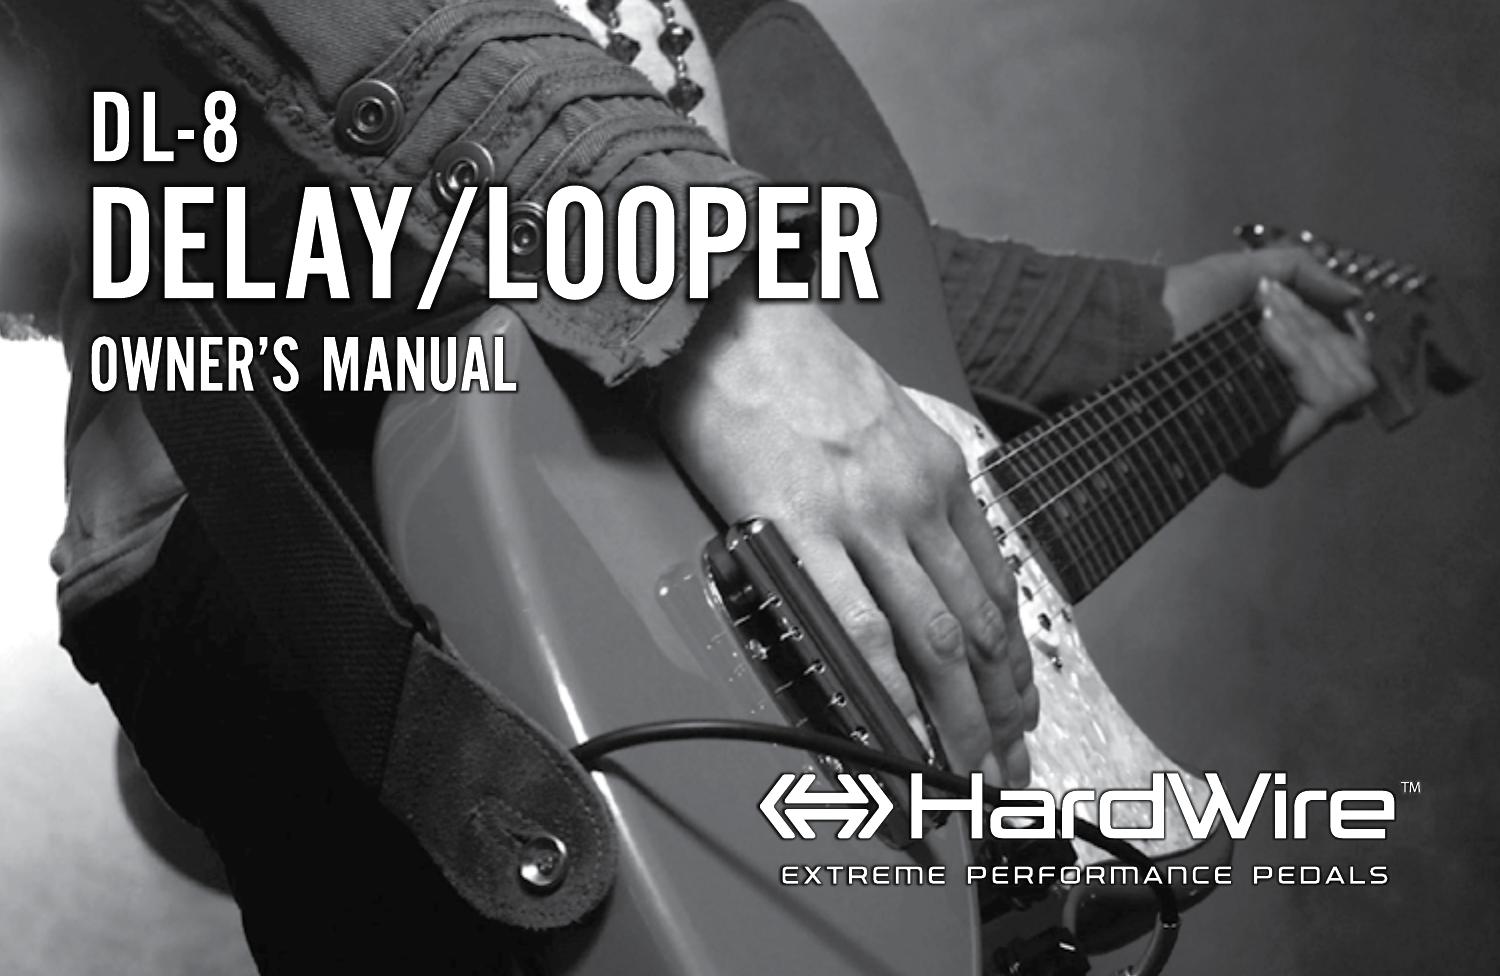 DigiTech DL-8 Guitar User Manual